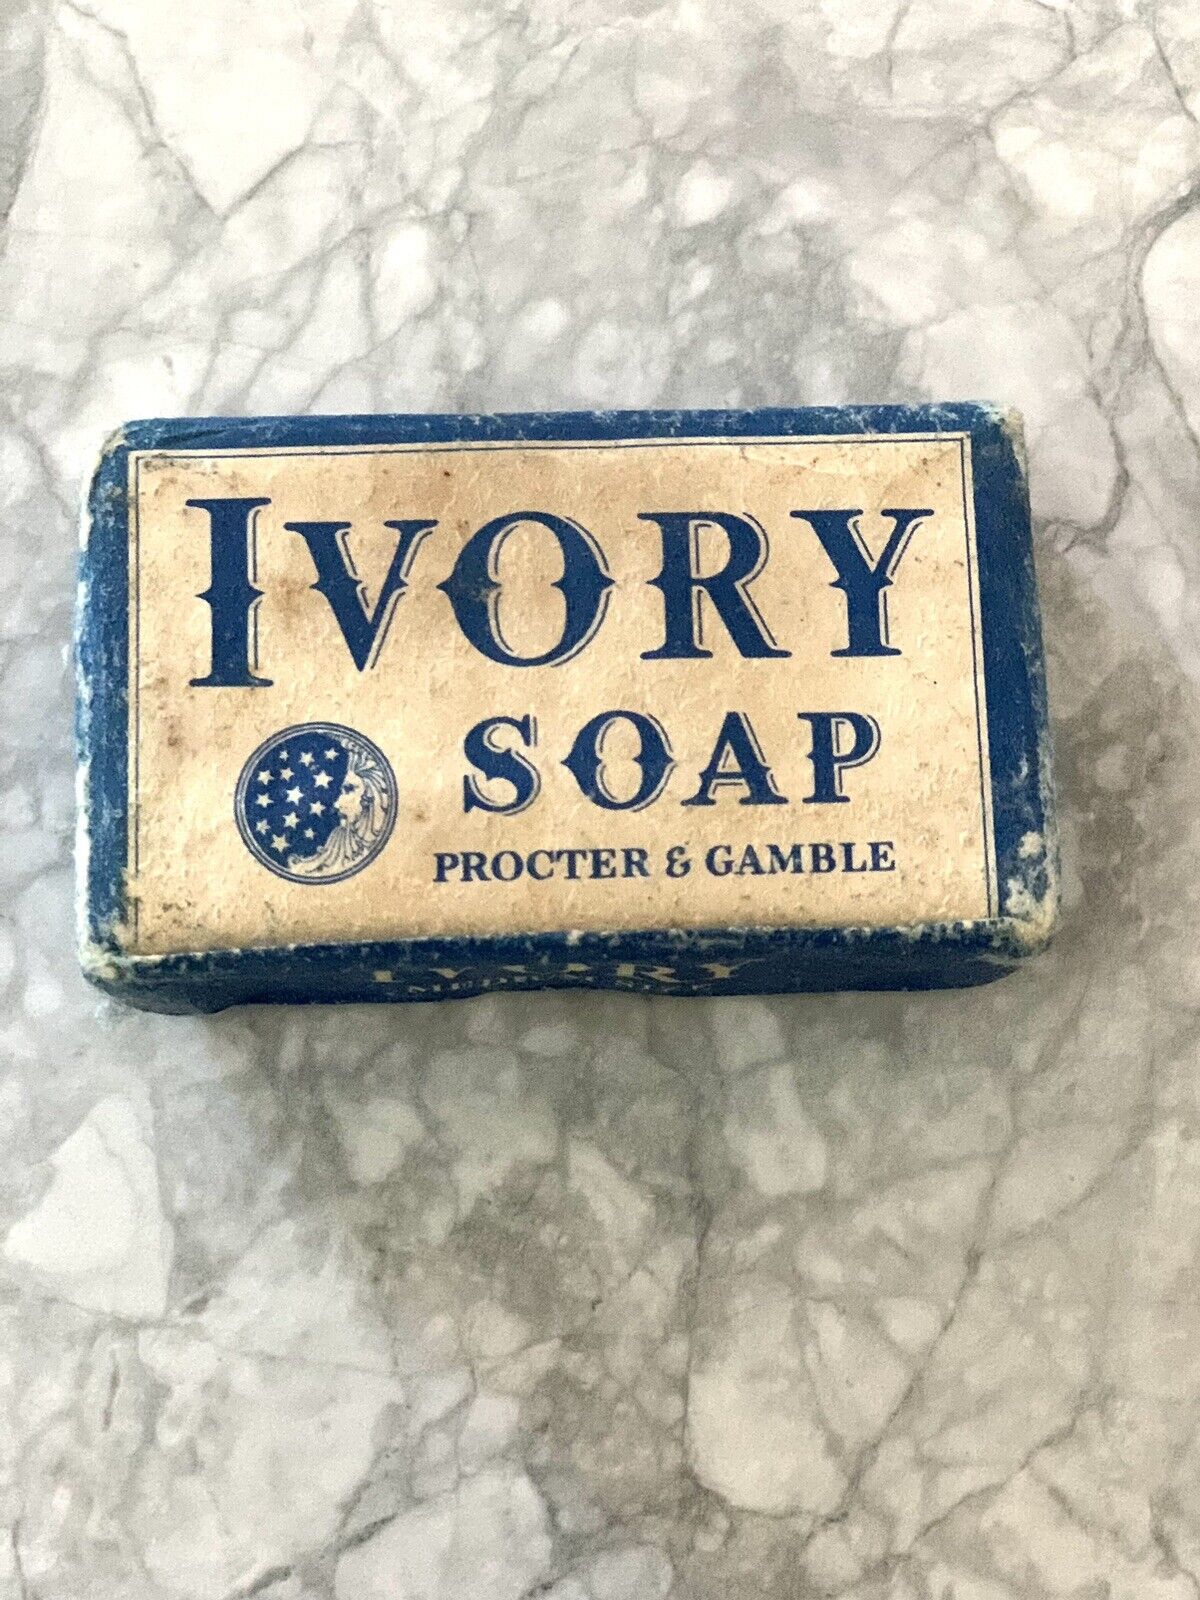 Antique 1940s Procter & Gamble Ivory Soap unopened